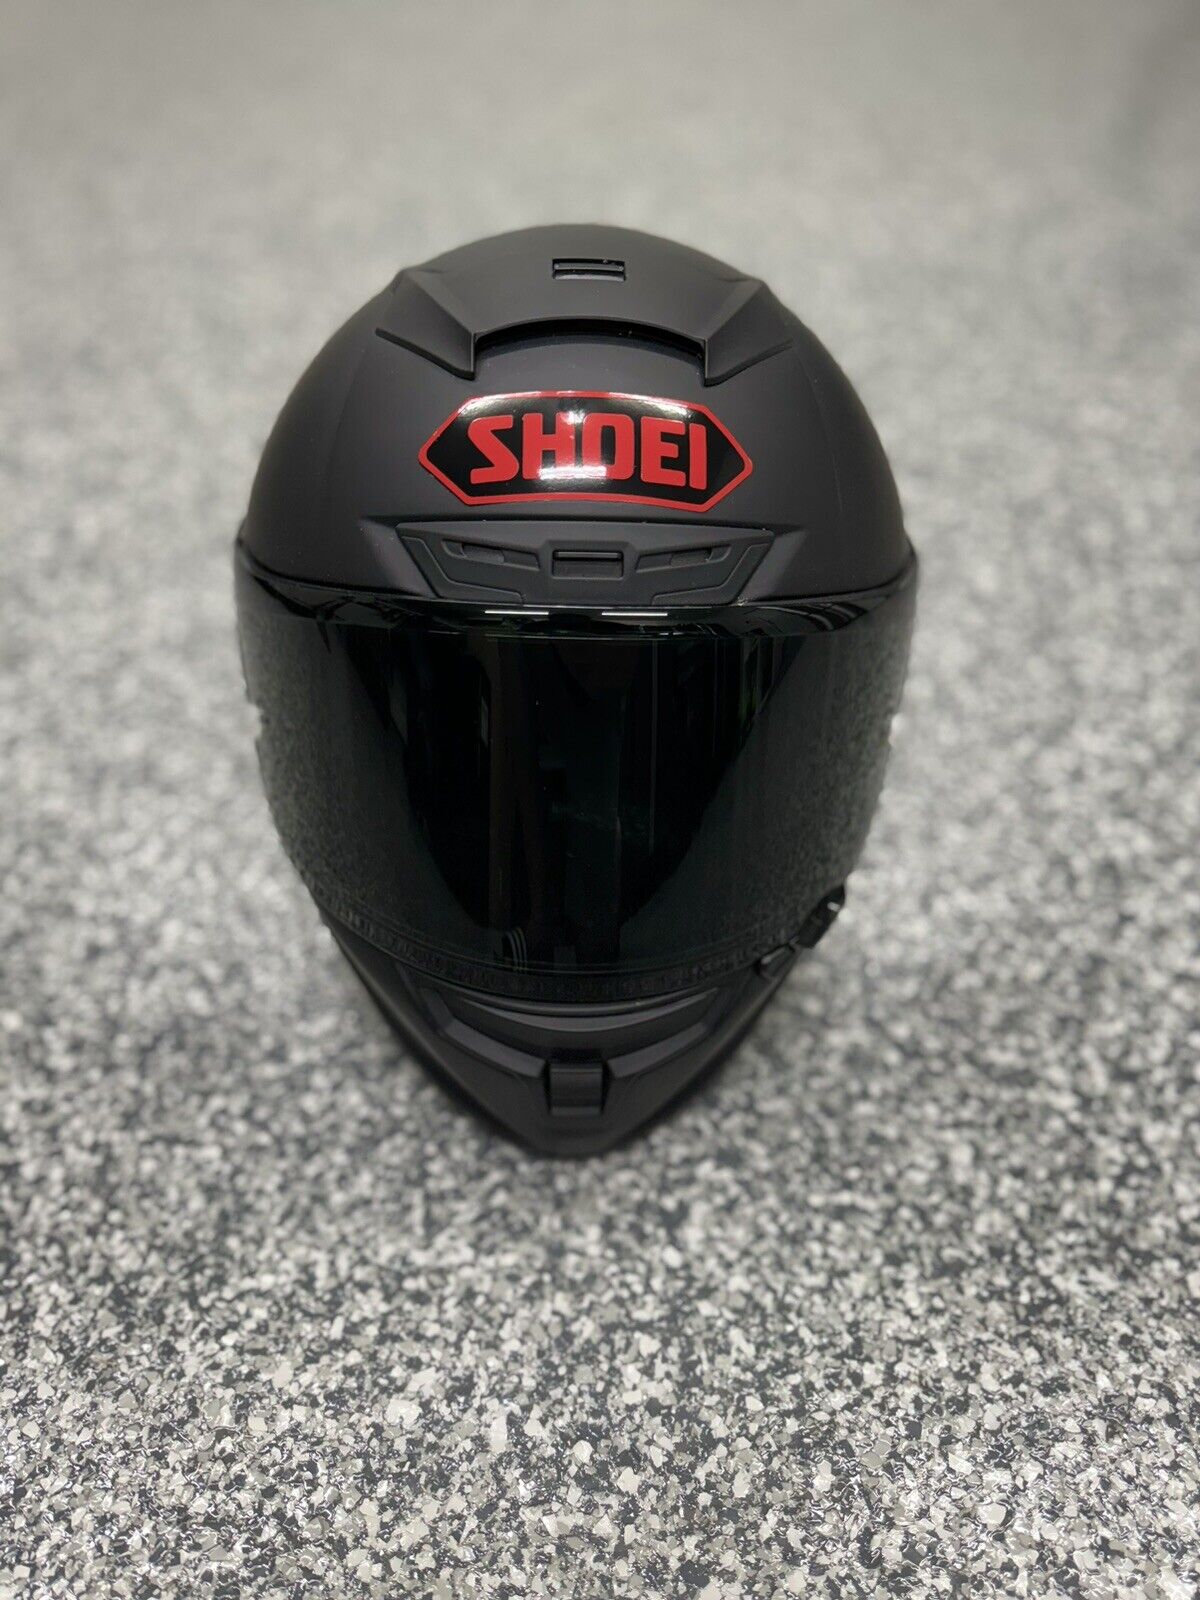 SHOEI X-Fourteen (x14) Full face Motorcycle Racing Helmet Matte Black, Size M